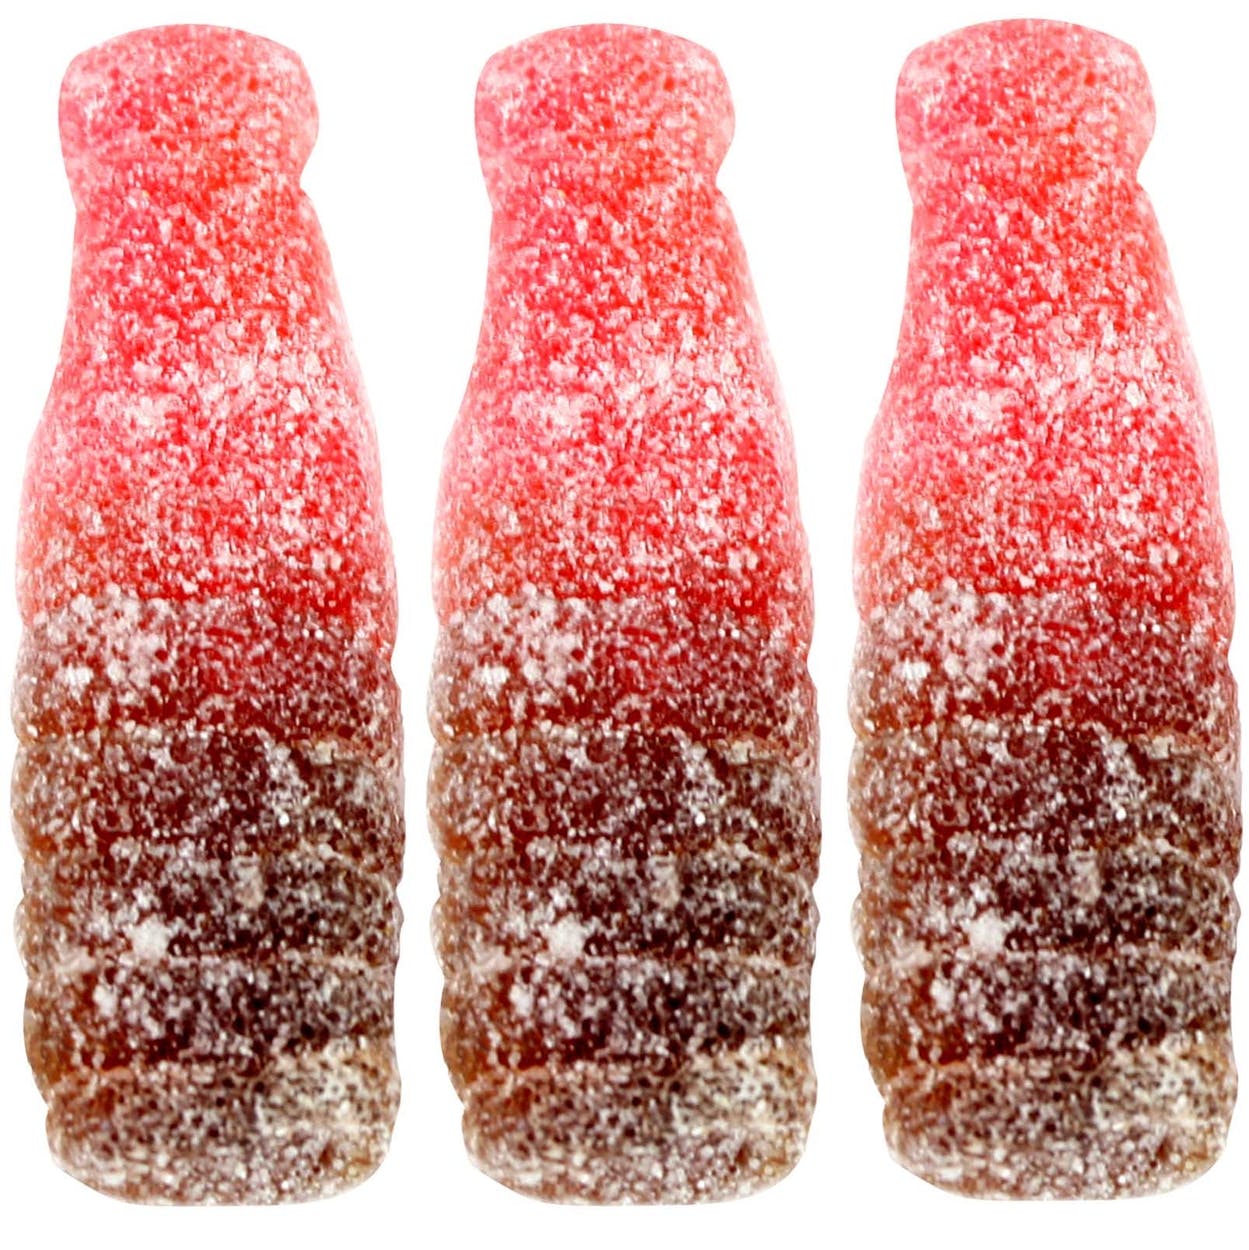 Canna Stripe - Cannabis Infused Gummies Strawbery